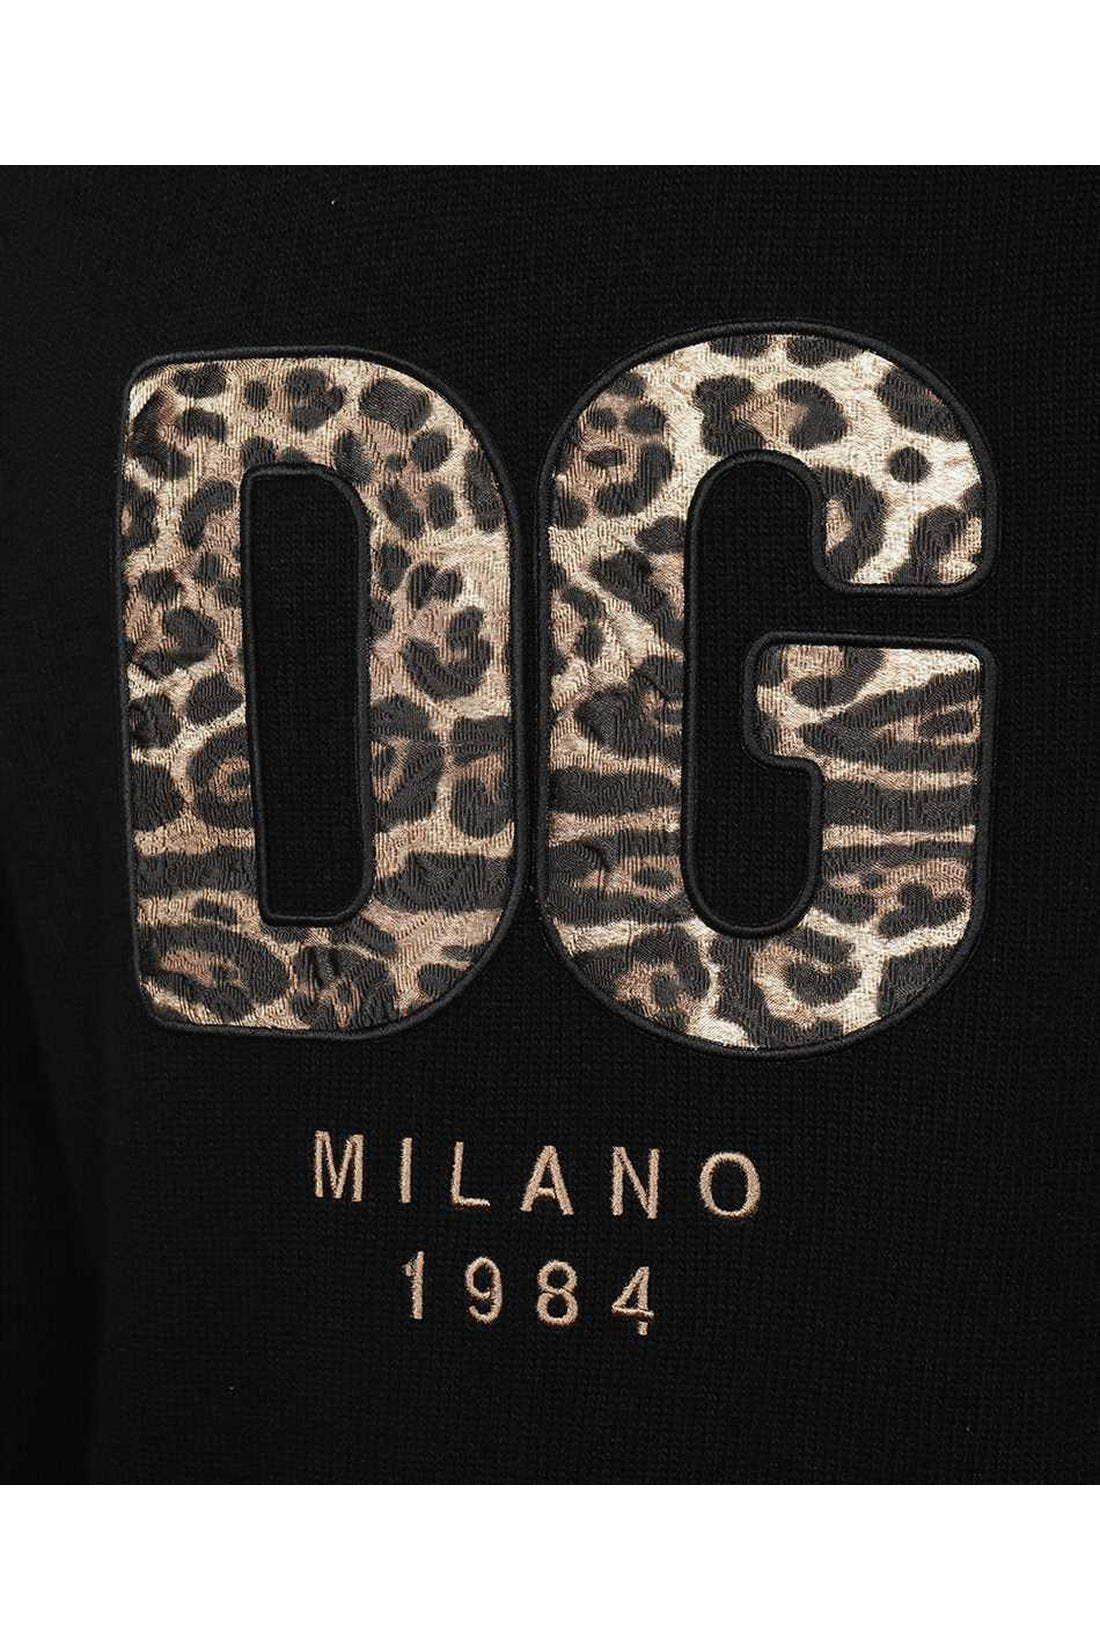 Dolce & Gabbana-OUTLET-SALE-Wool crew-neck sweater-ARCHIVIST